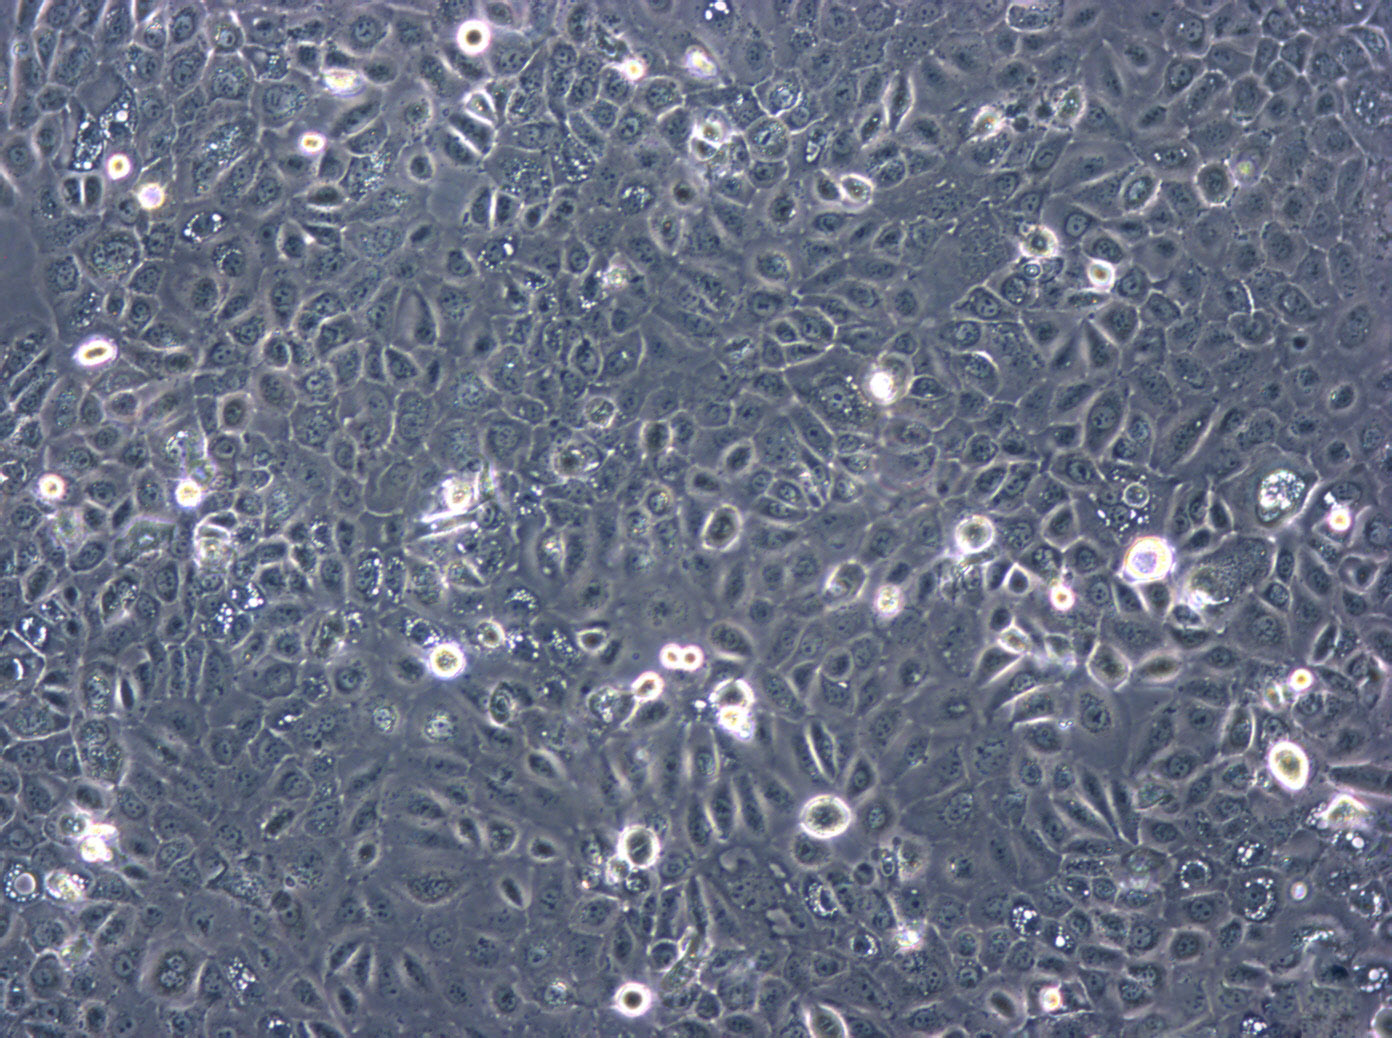 Evsa-T epithelioid cells人乳腺癌细胞系